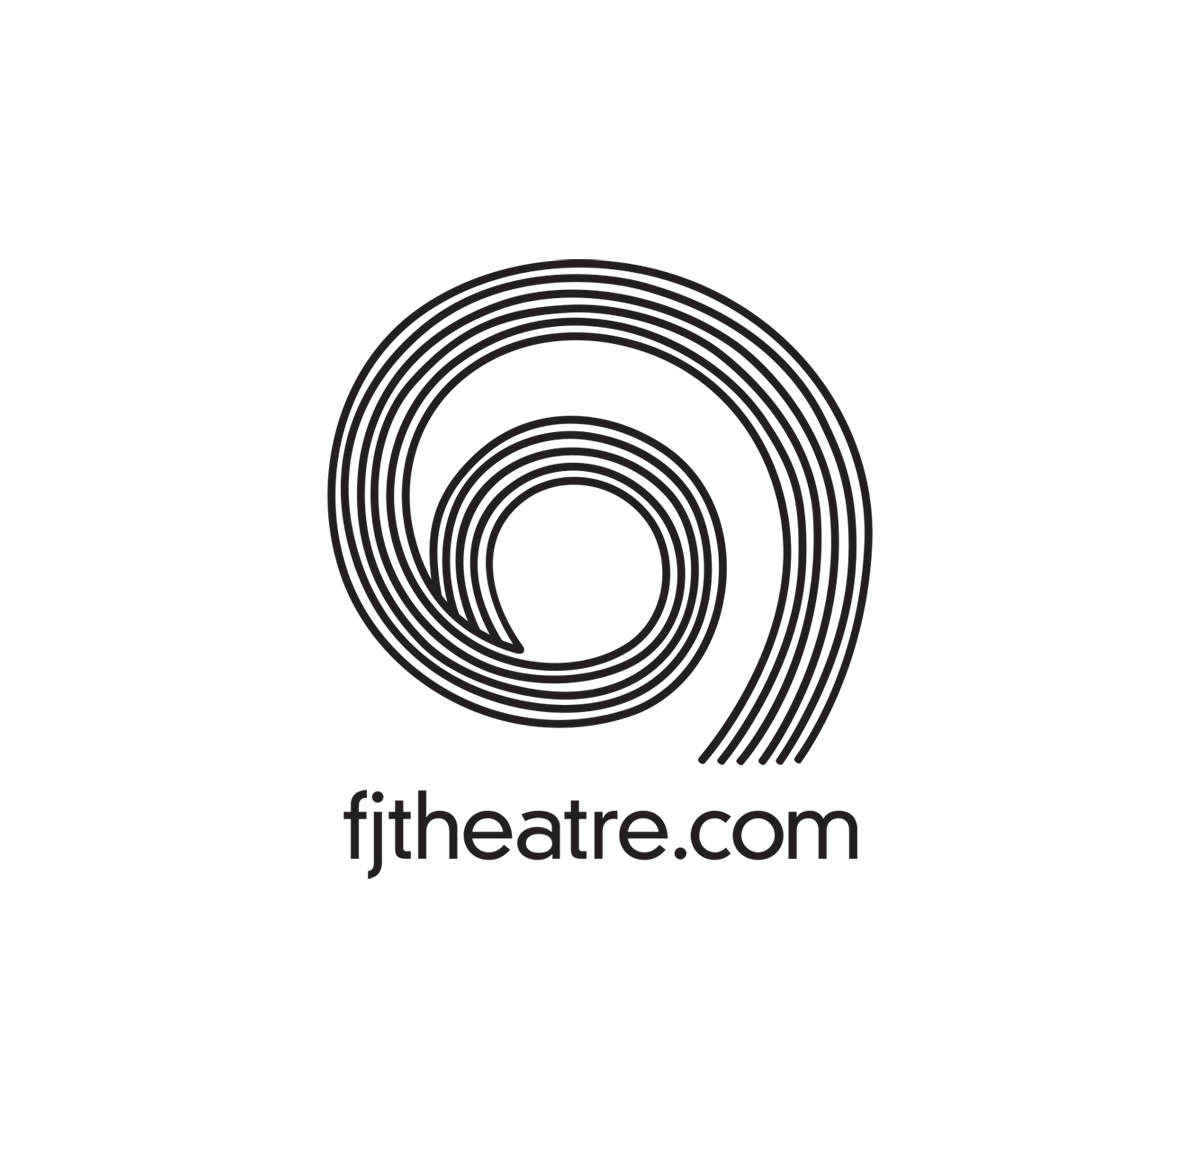 Fleetwood-Jourdain Theatre logo web version